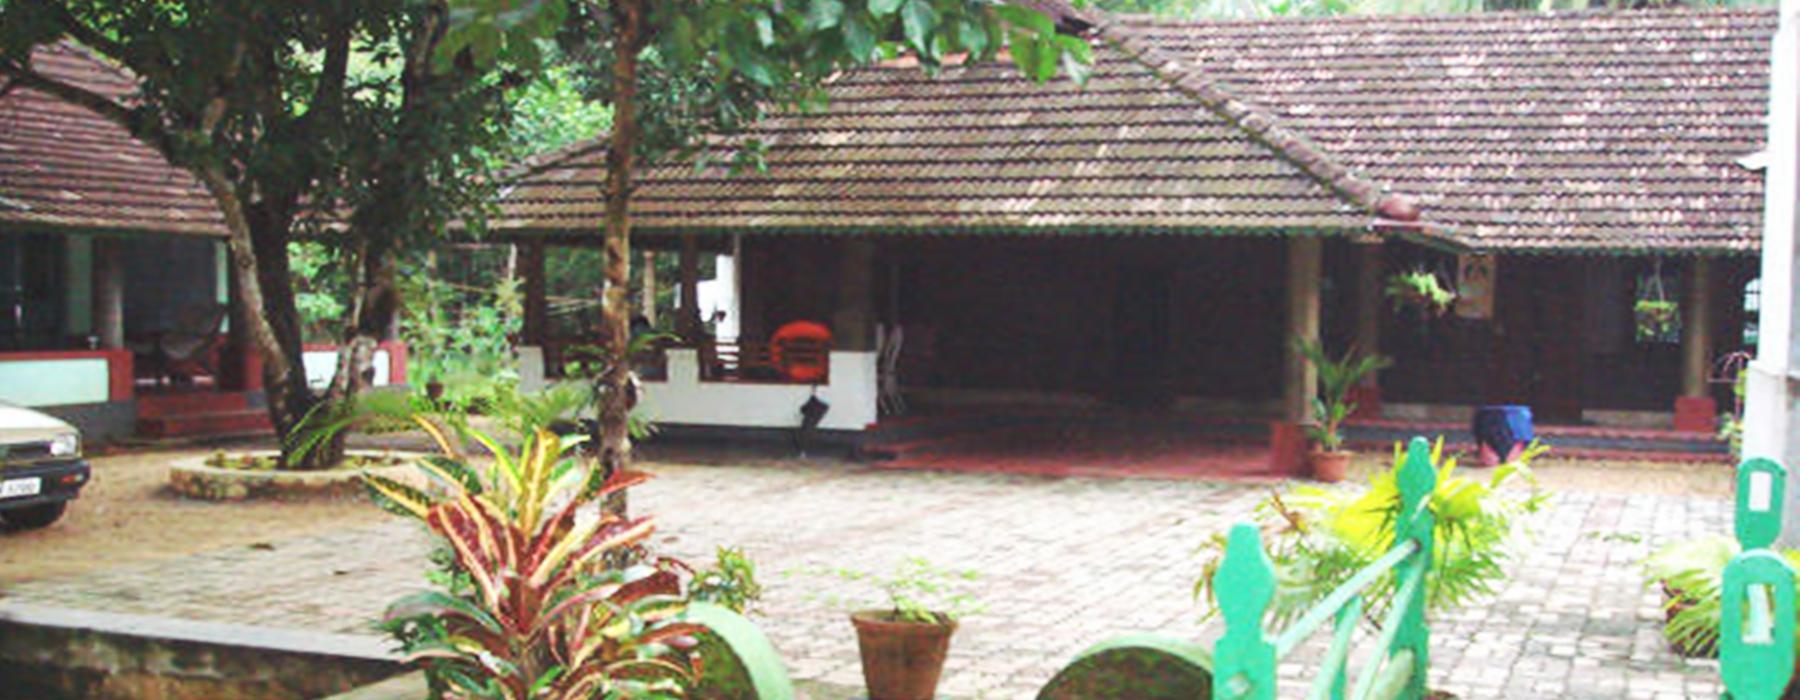 Kodianthara Heritage Home